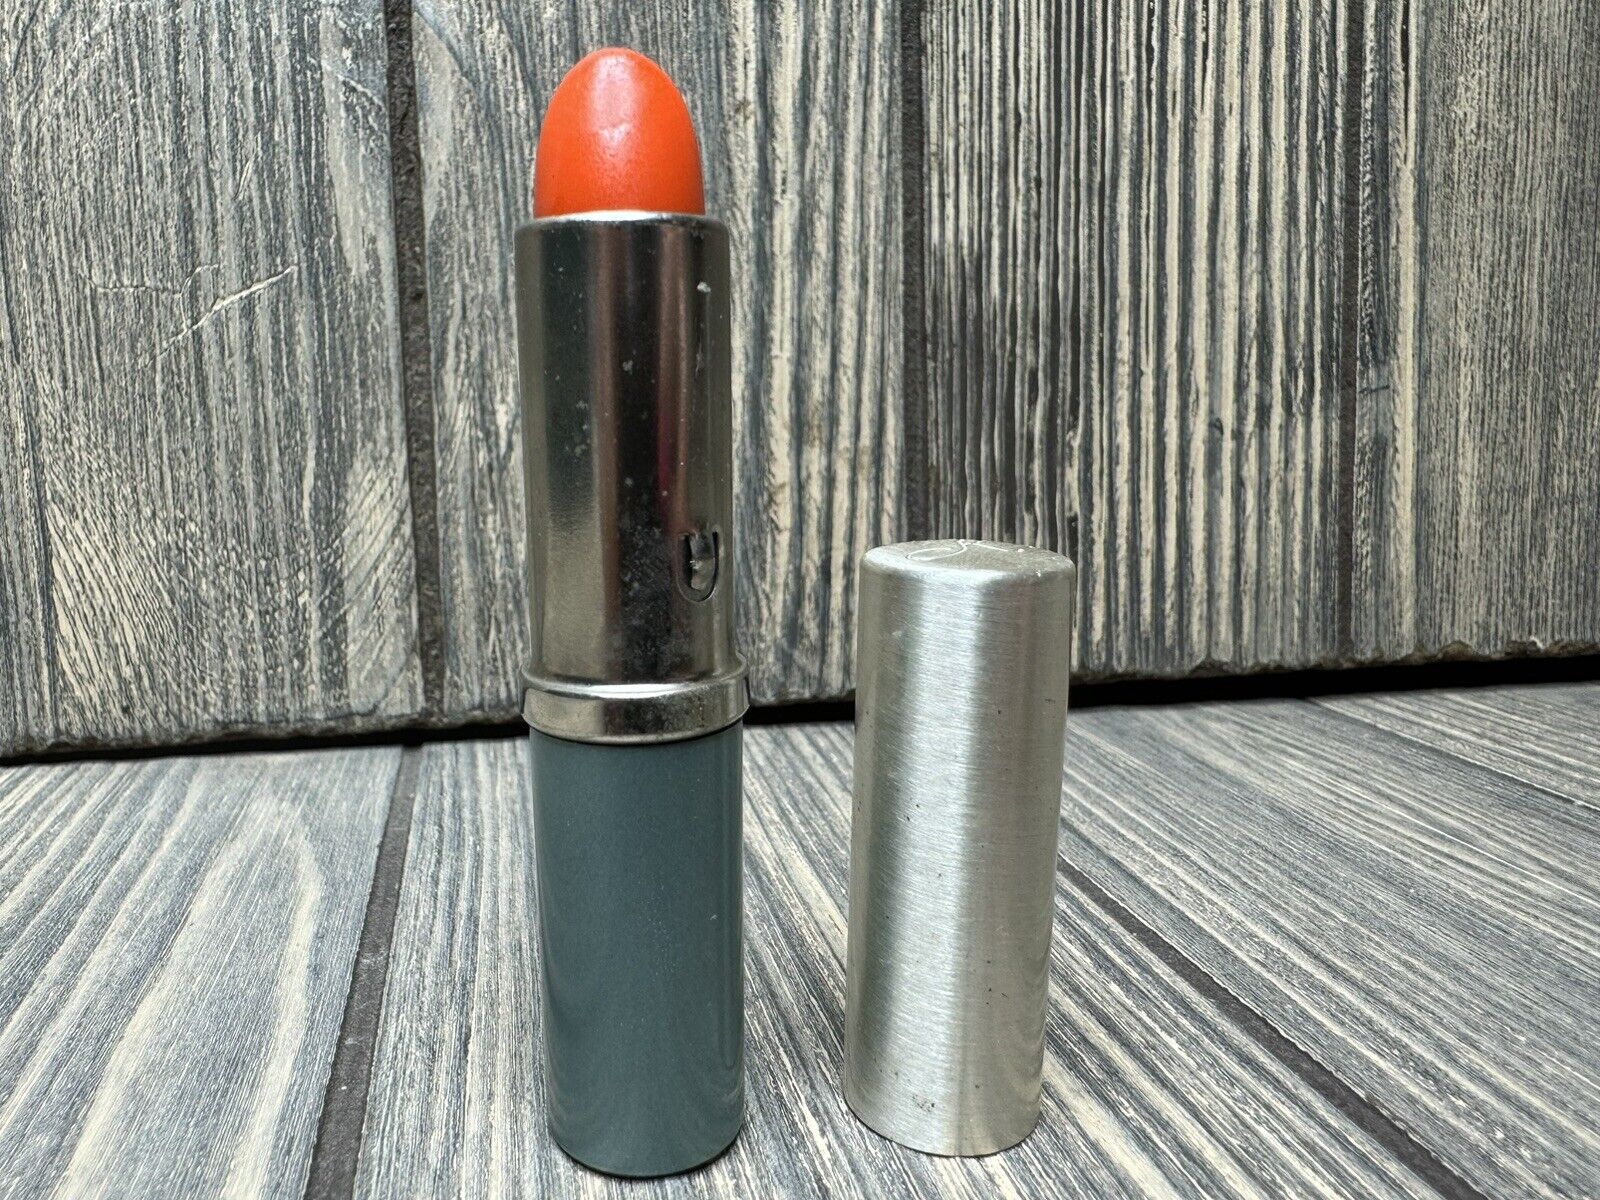 Vtg Lady Koscot Lipstick Shade Sunrise Orange Coral 1960's 1970's ? Collectib